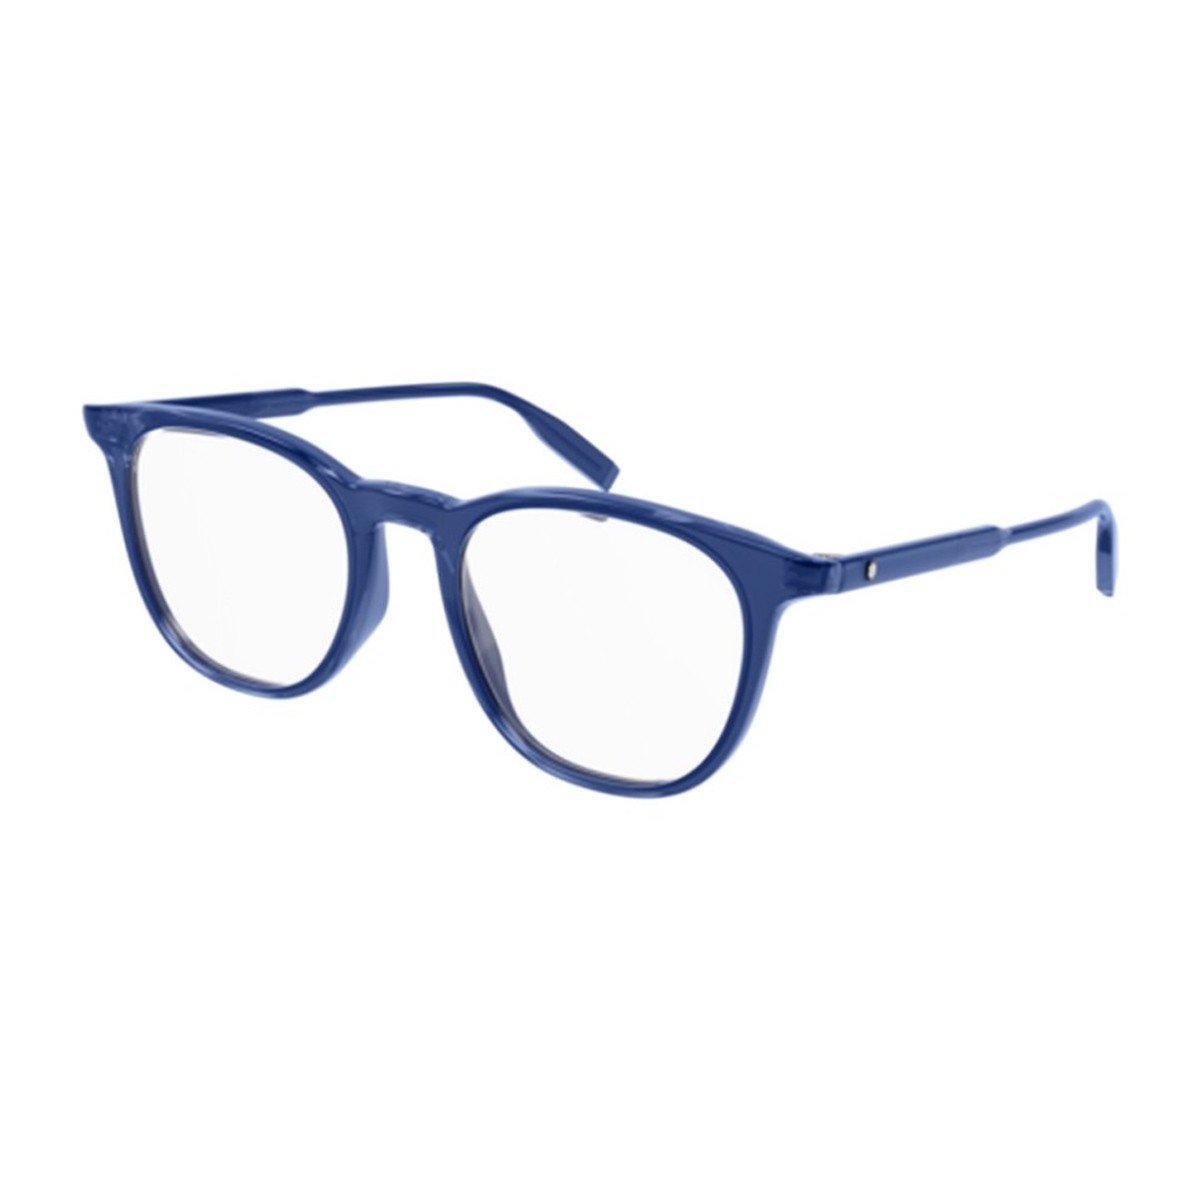 11BD4B20A - - Montblanc | Men's eyeglasses